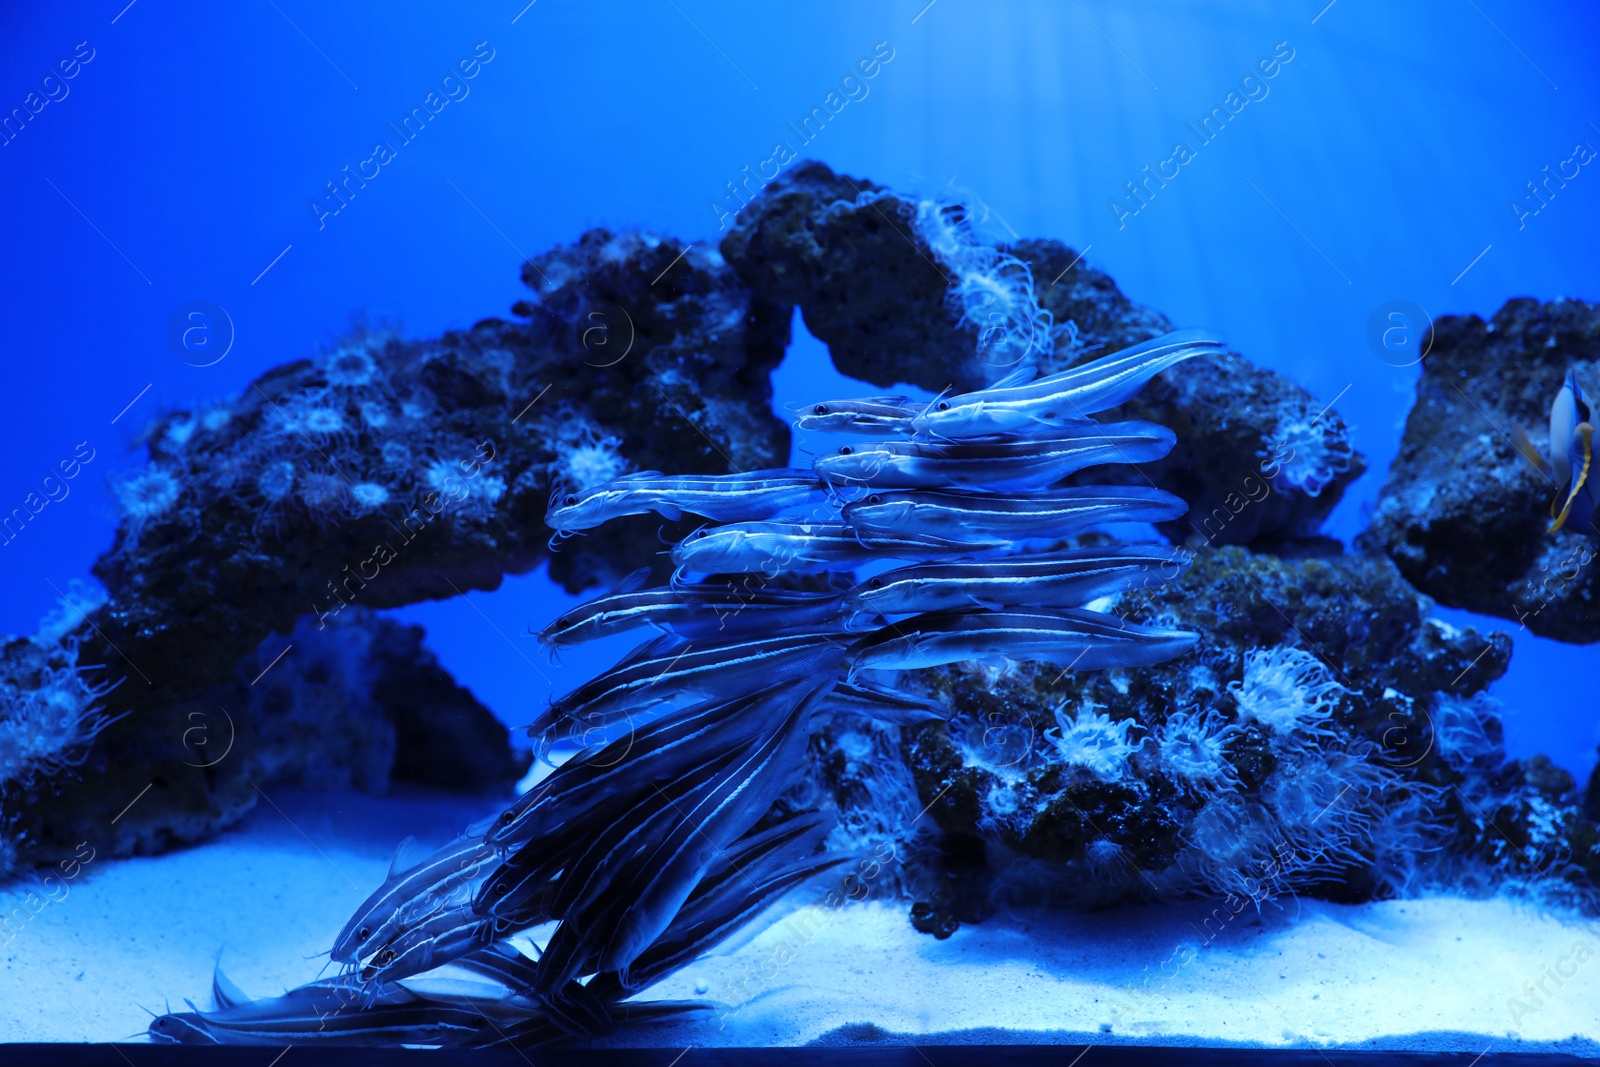 Photo of School of catfish swimming in clear aquarium water